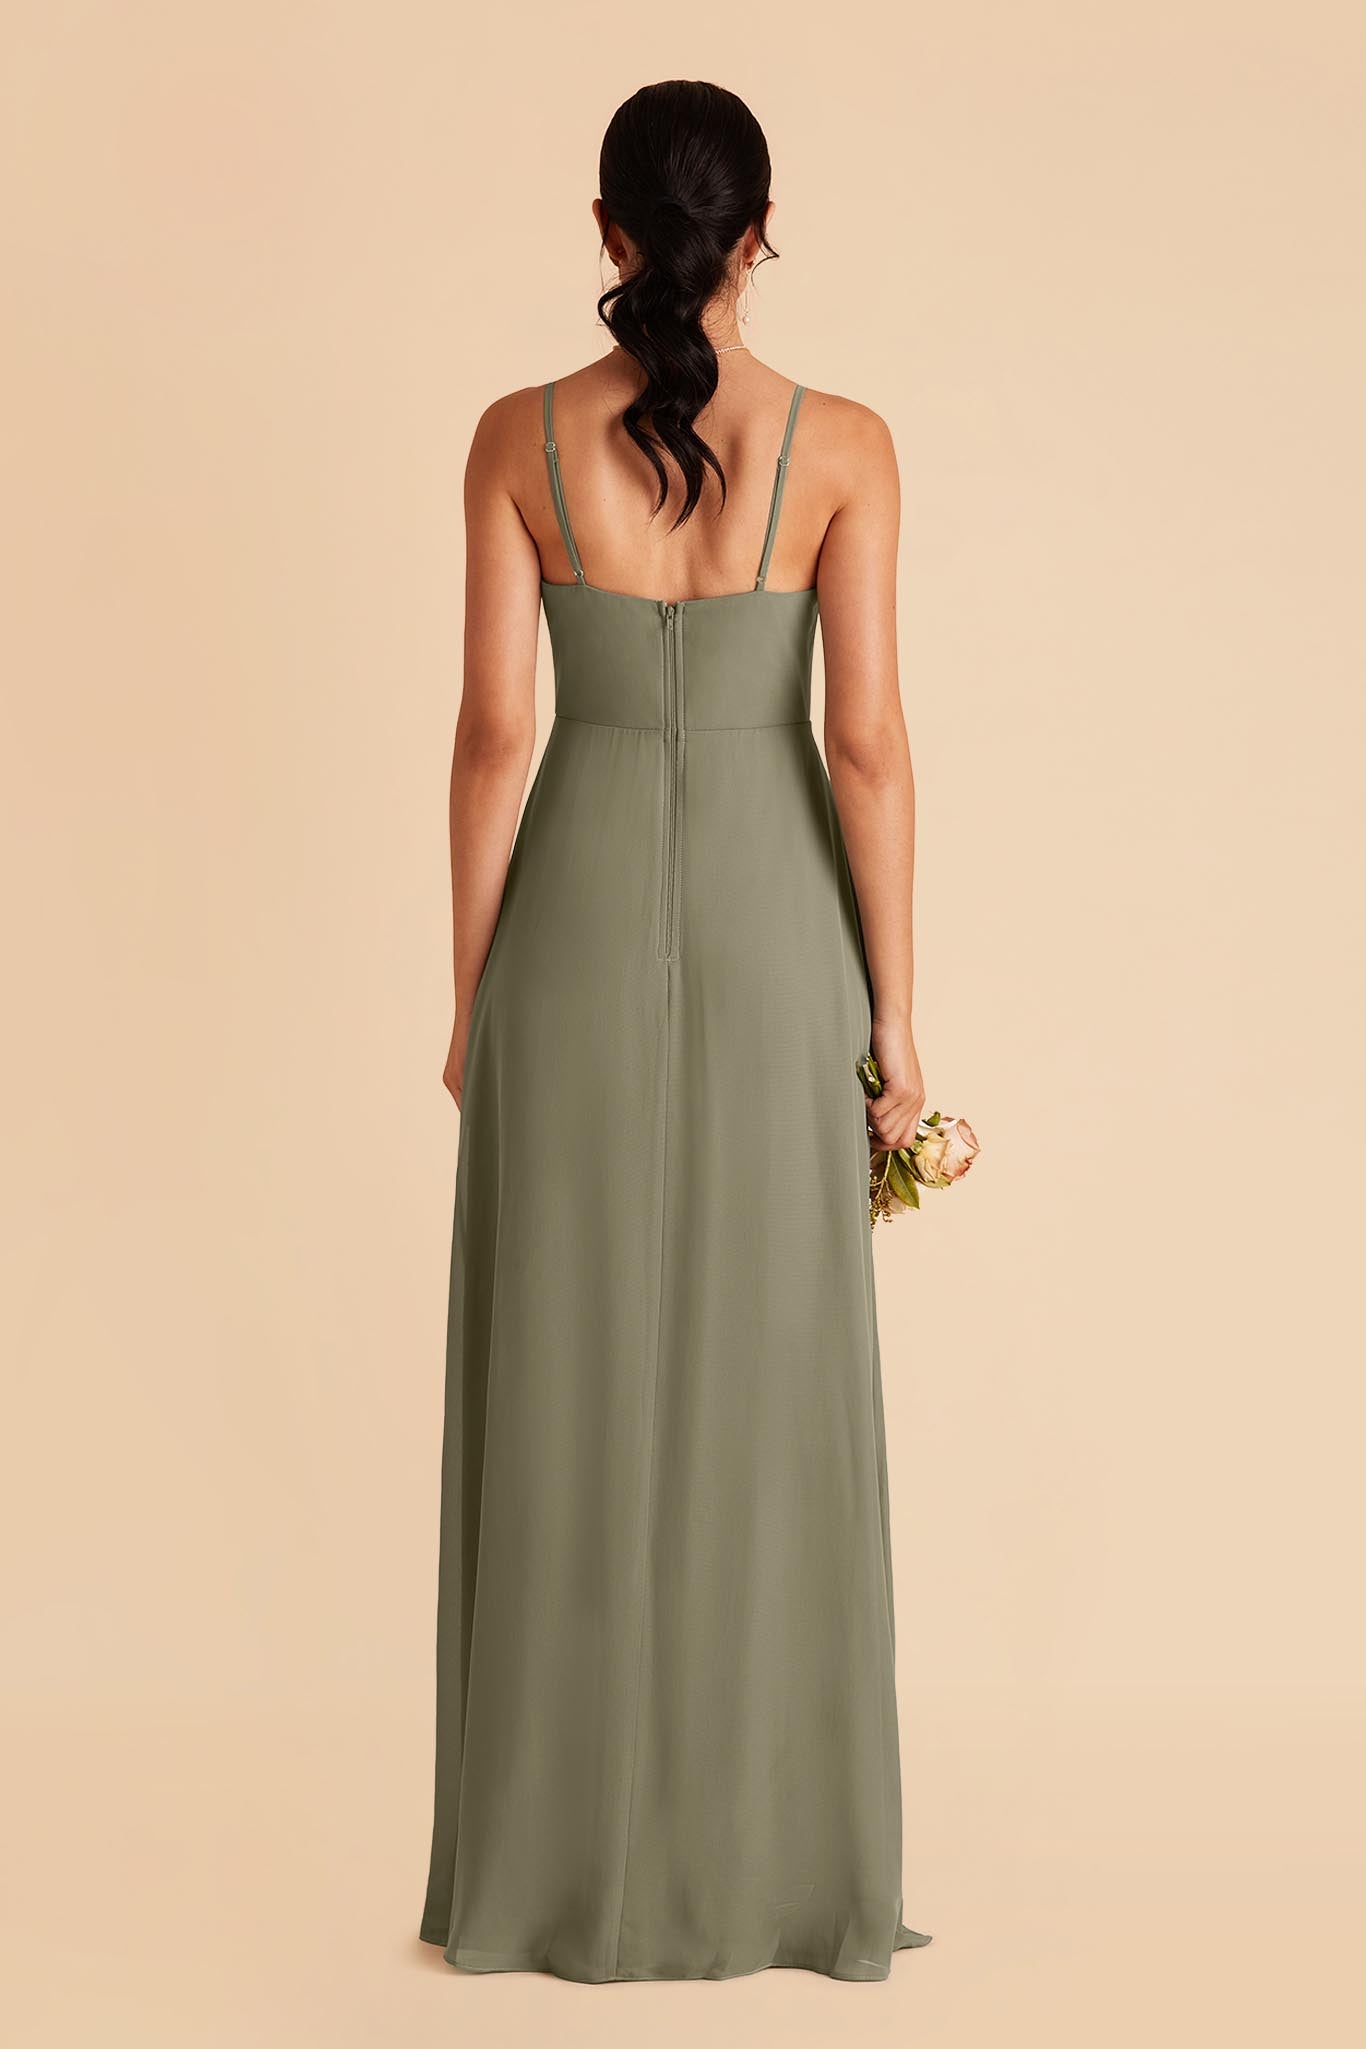 Moss Green Amy Chiffon Dress by Birdy Grey